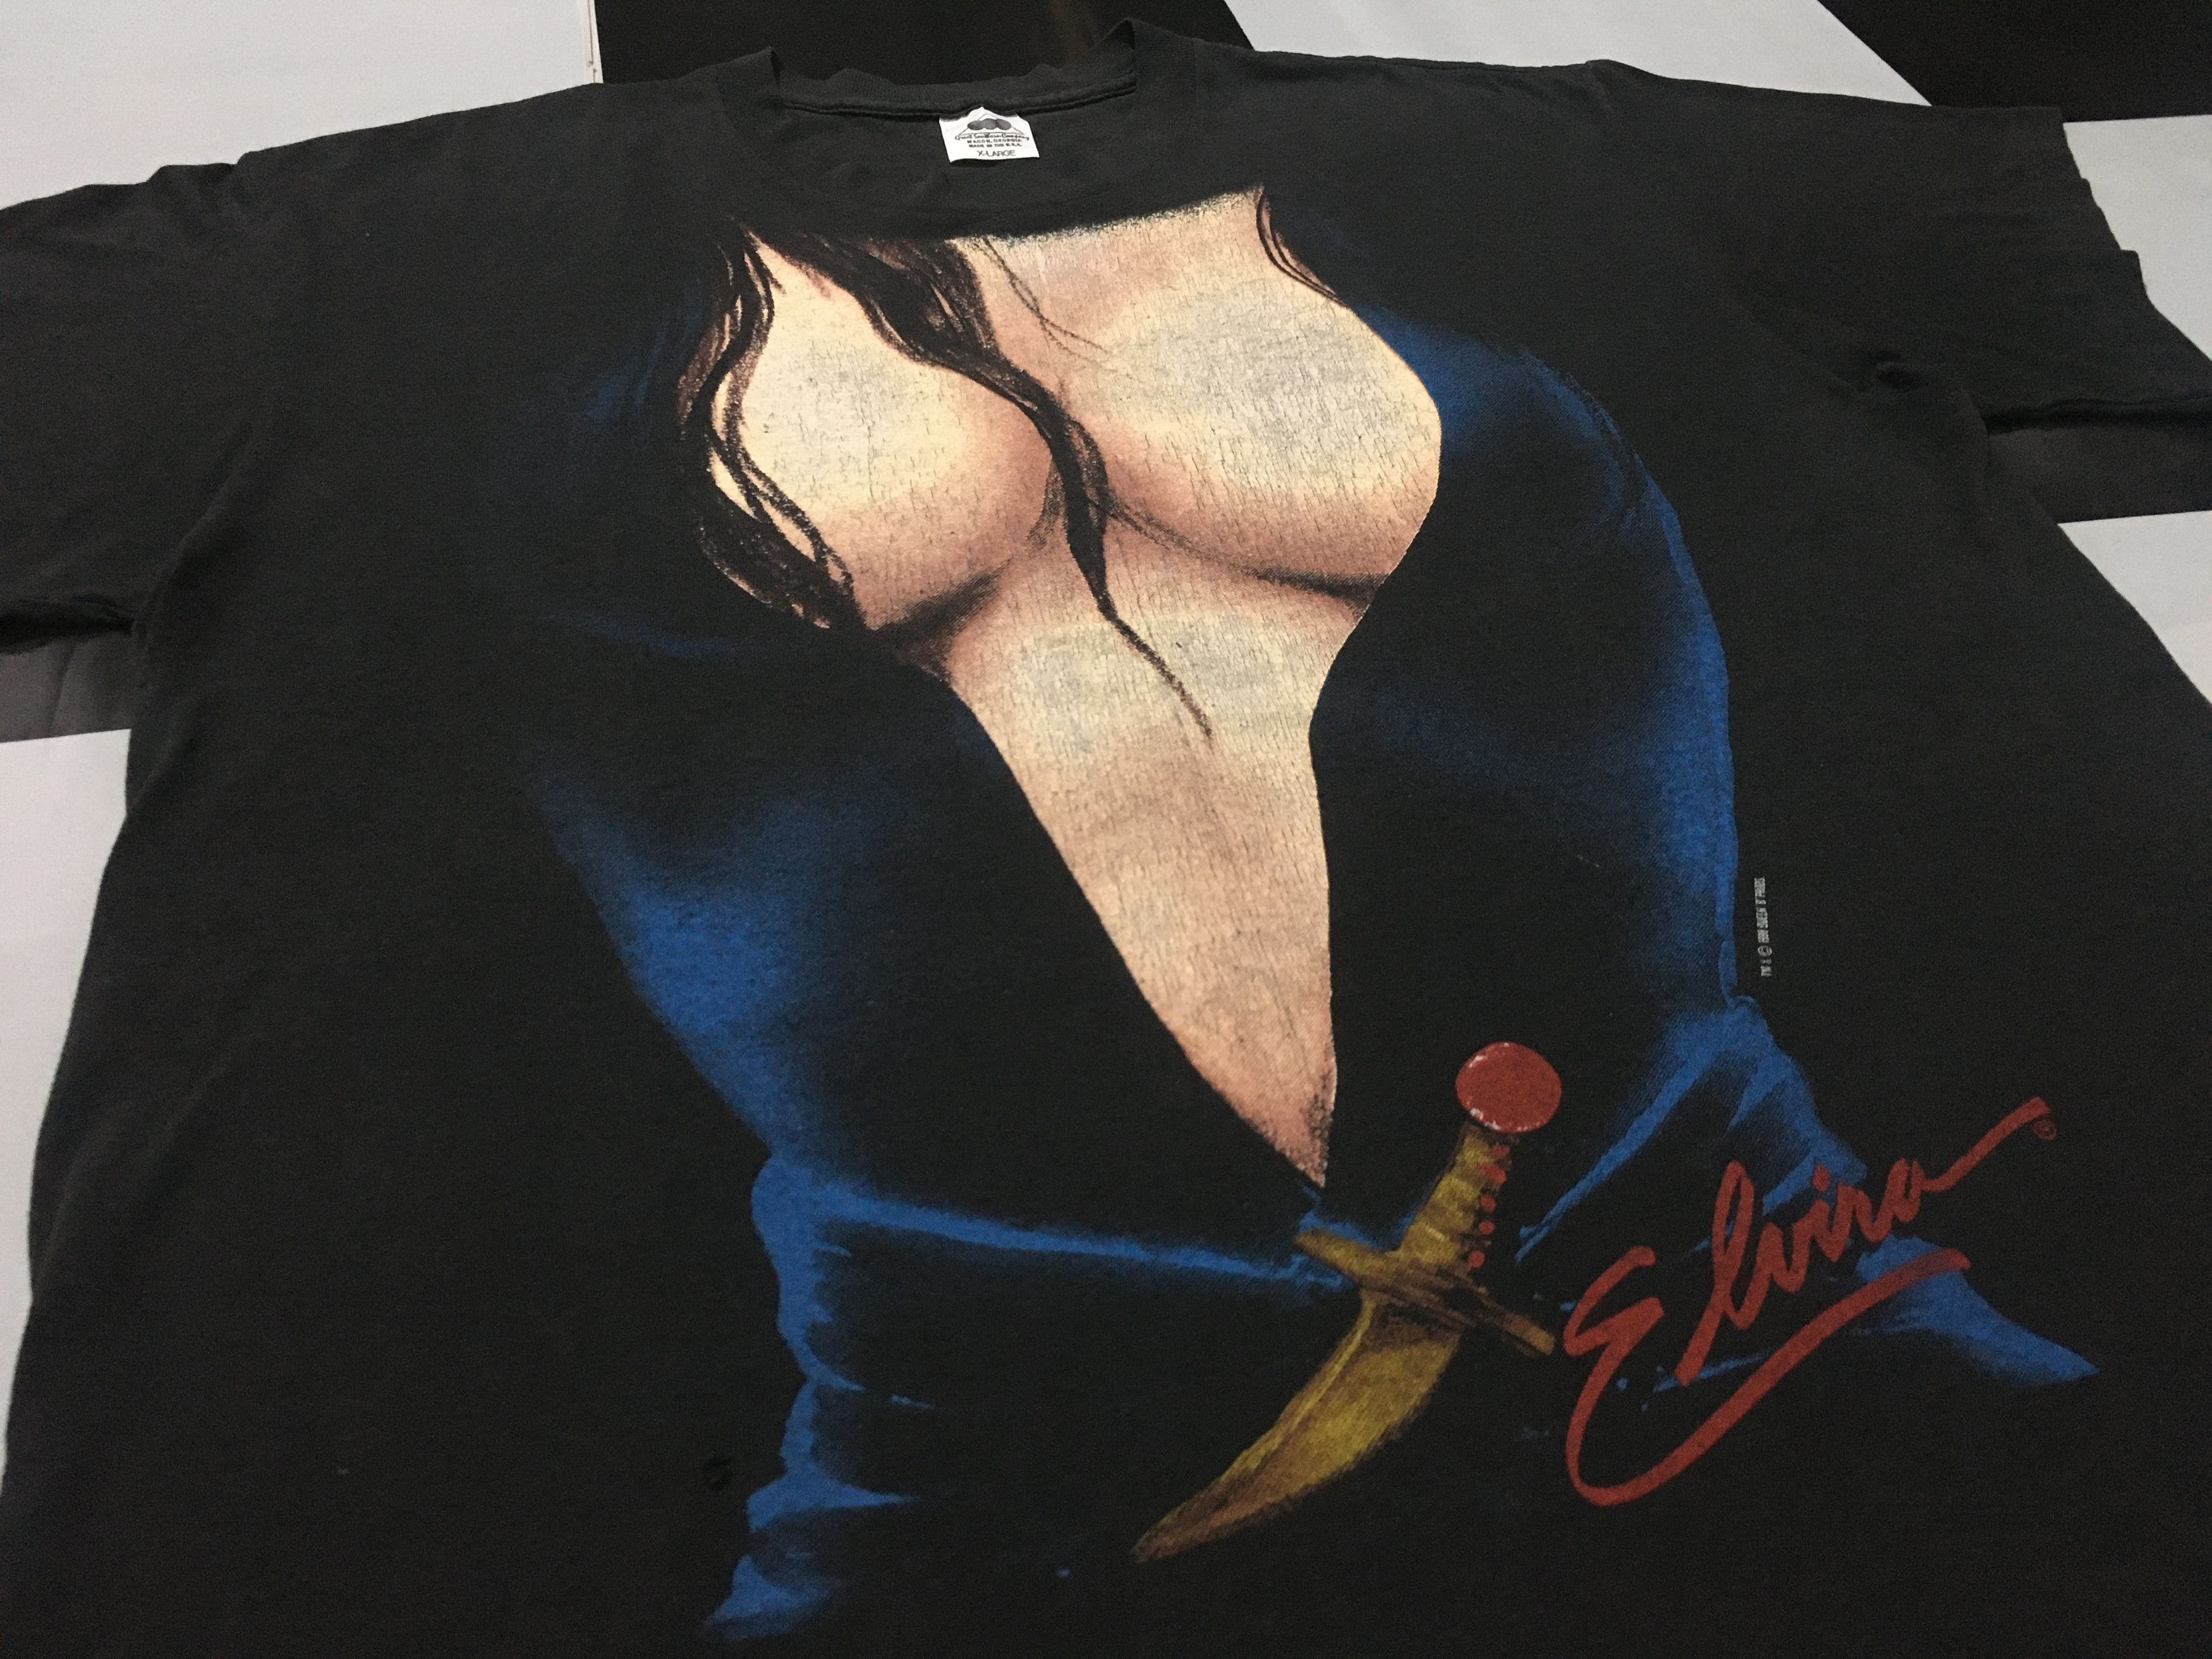 Vintage Vintage Elvira Shirt 1988 Mistress Of The Dark Full Printed Size US XL / EU 56 / 4 - 1 Preview